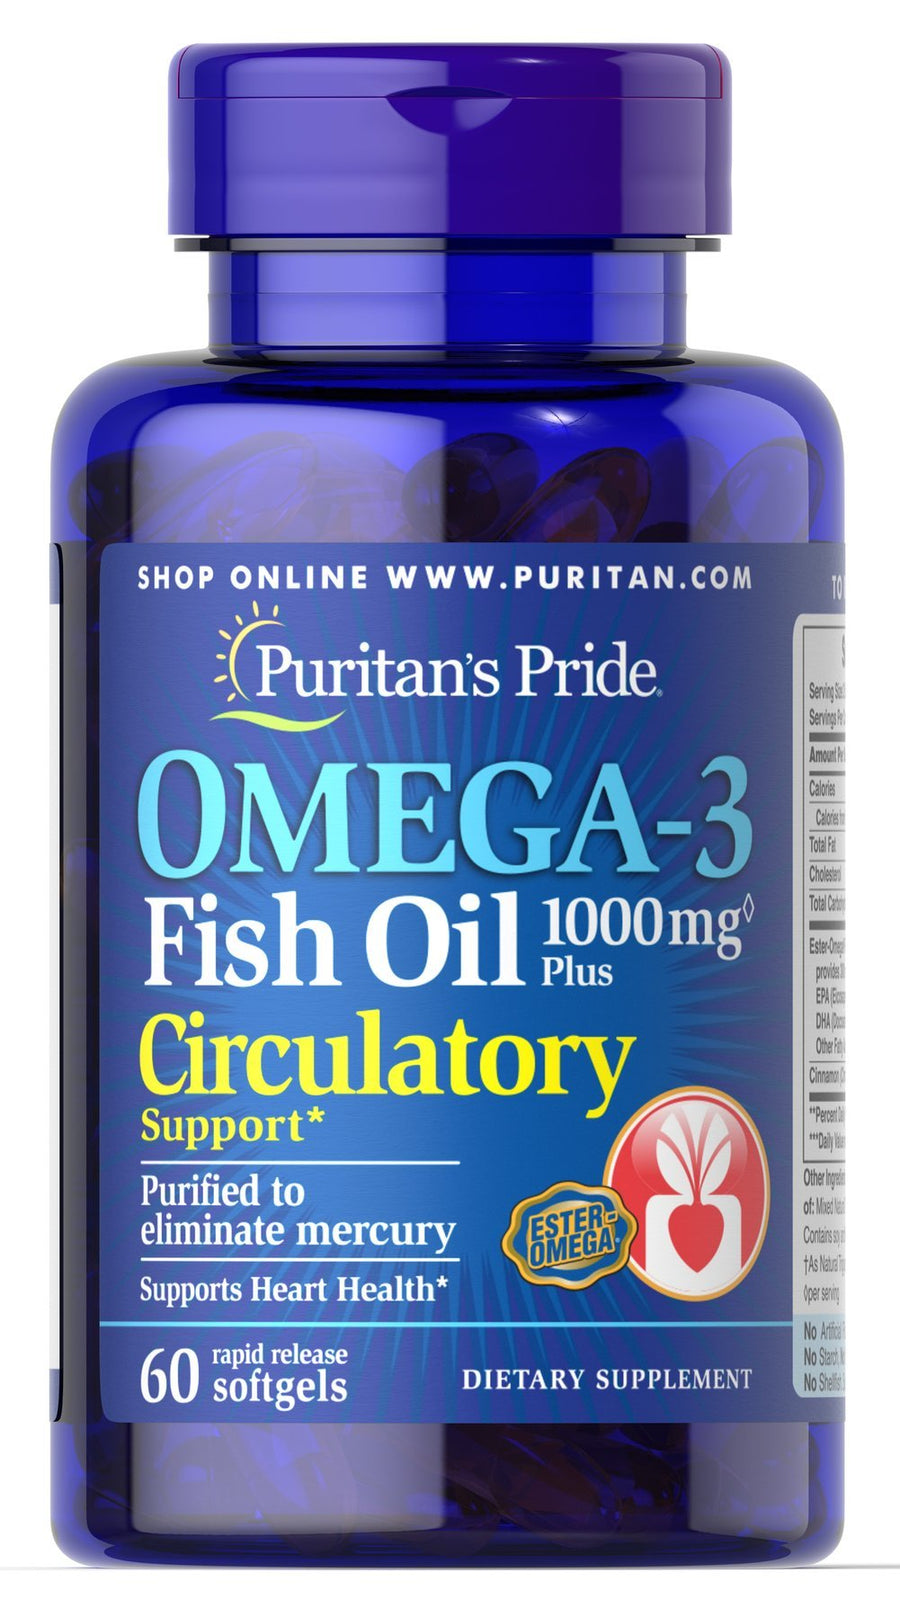 Omega-3 Fish Oil Plus Circulatory Support**